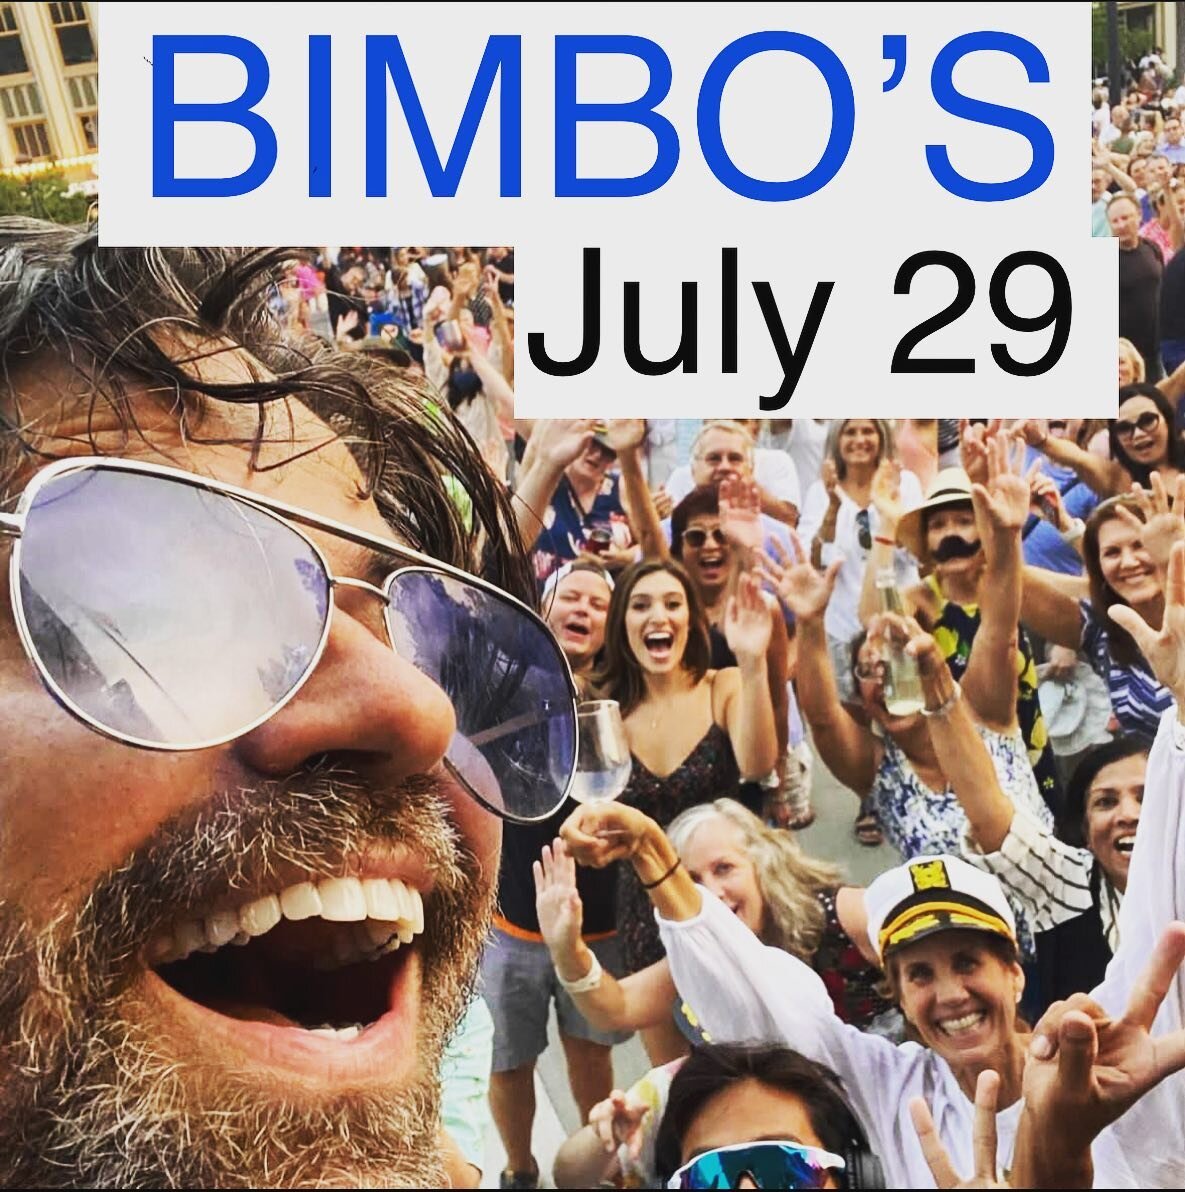 Next Saturday July 29th! @bimbos365club